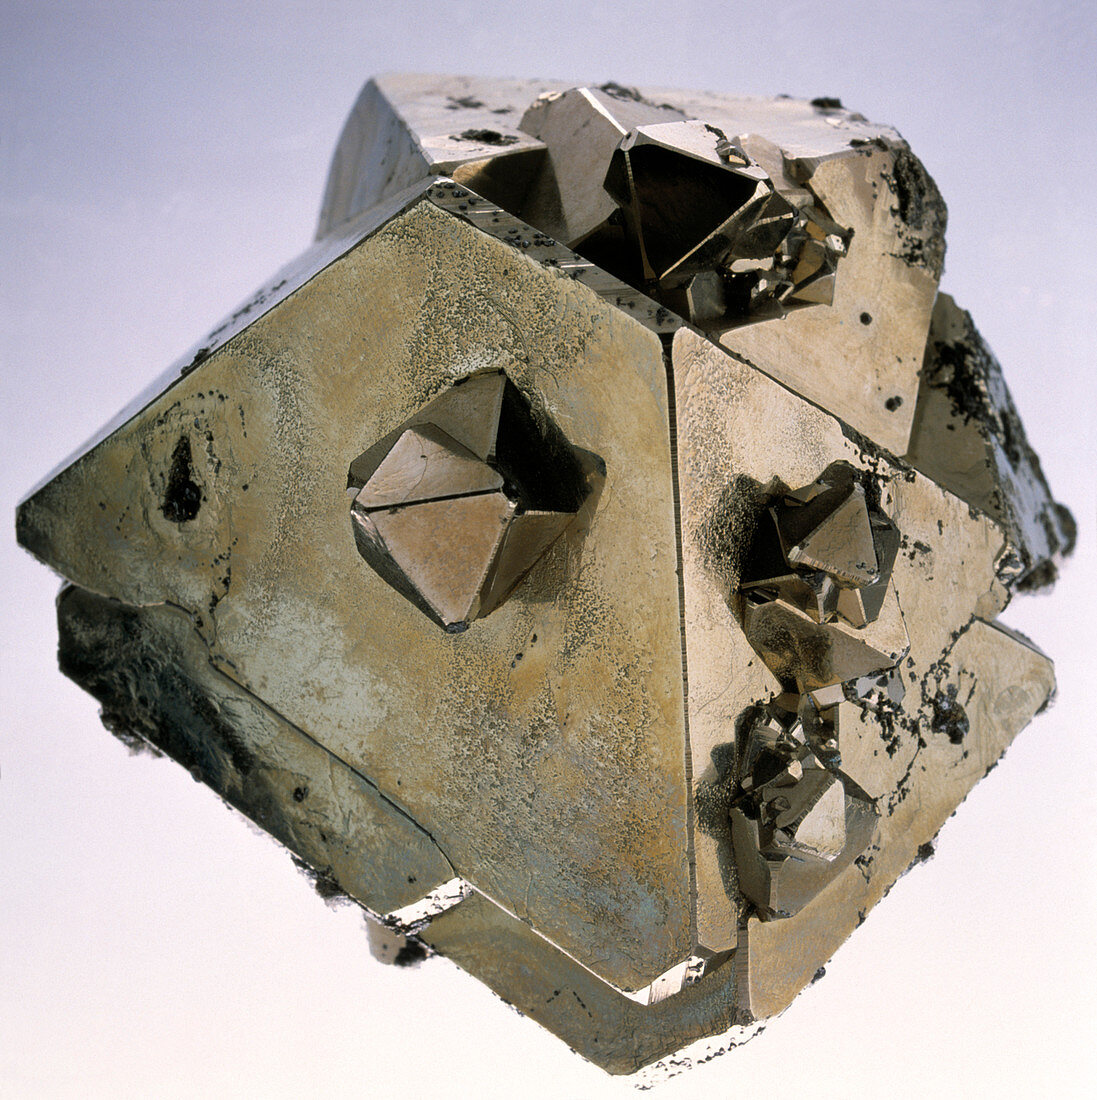 Iron pyrite crystal